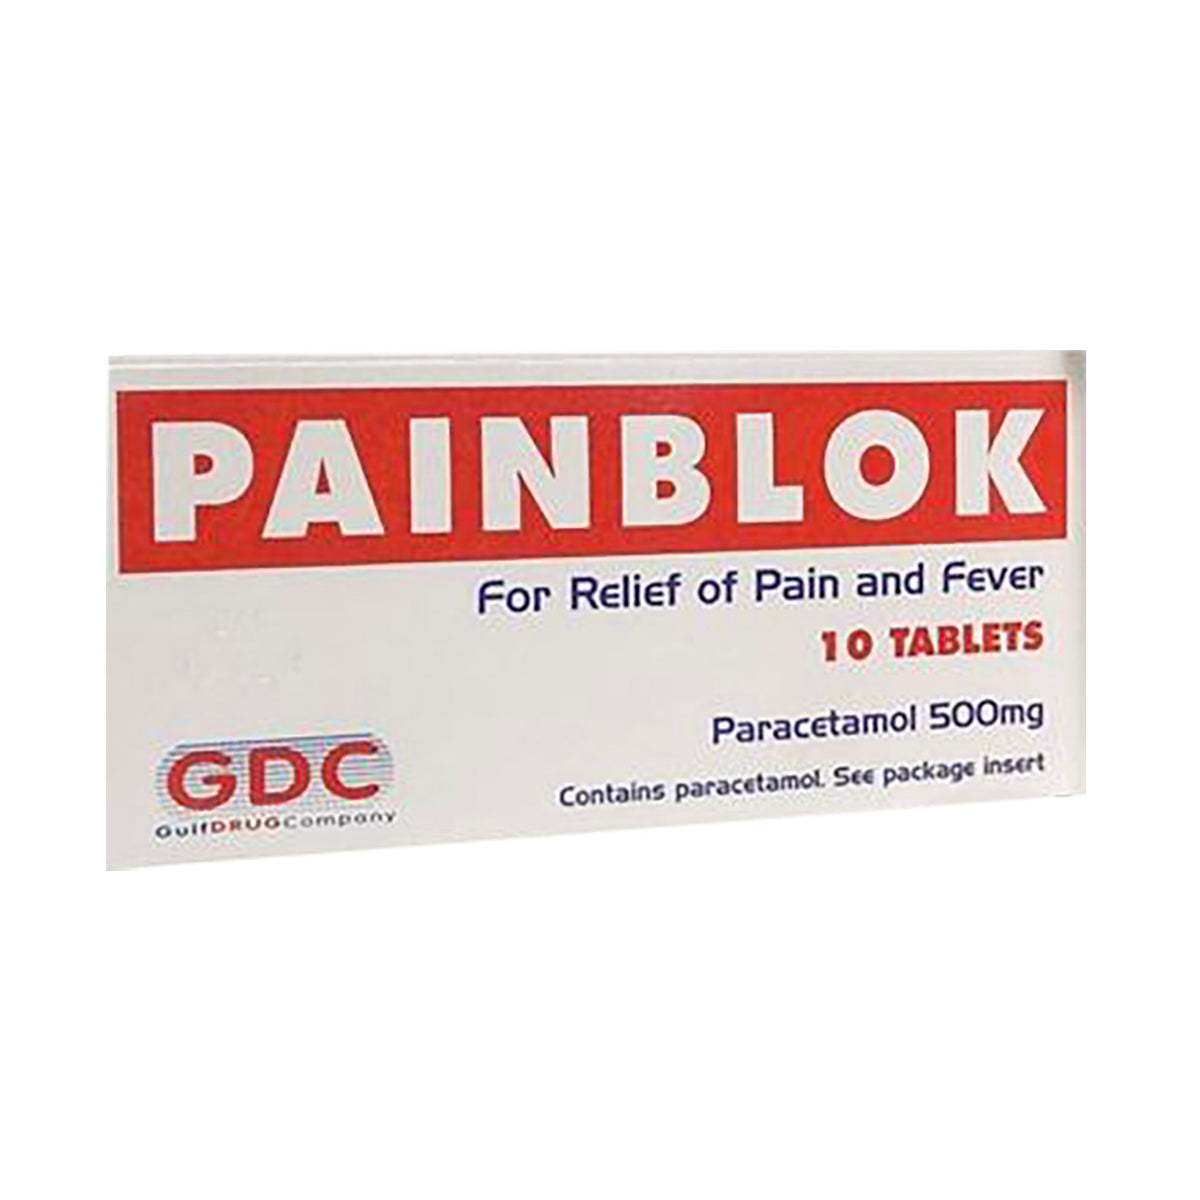 painblock